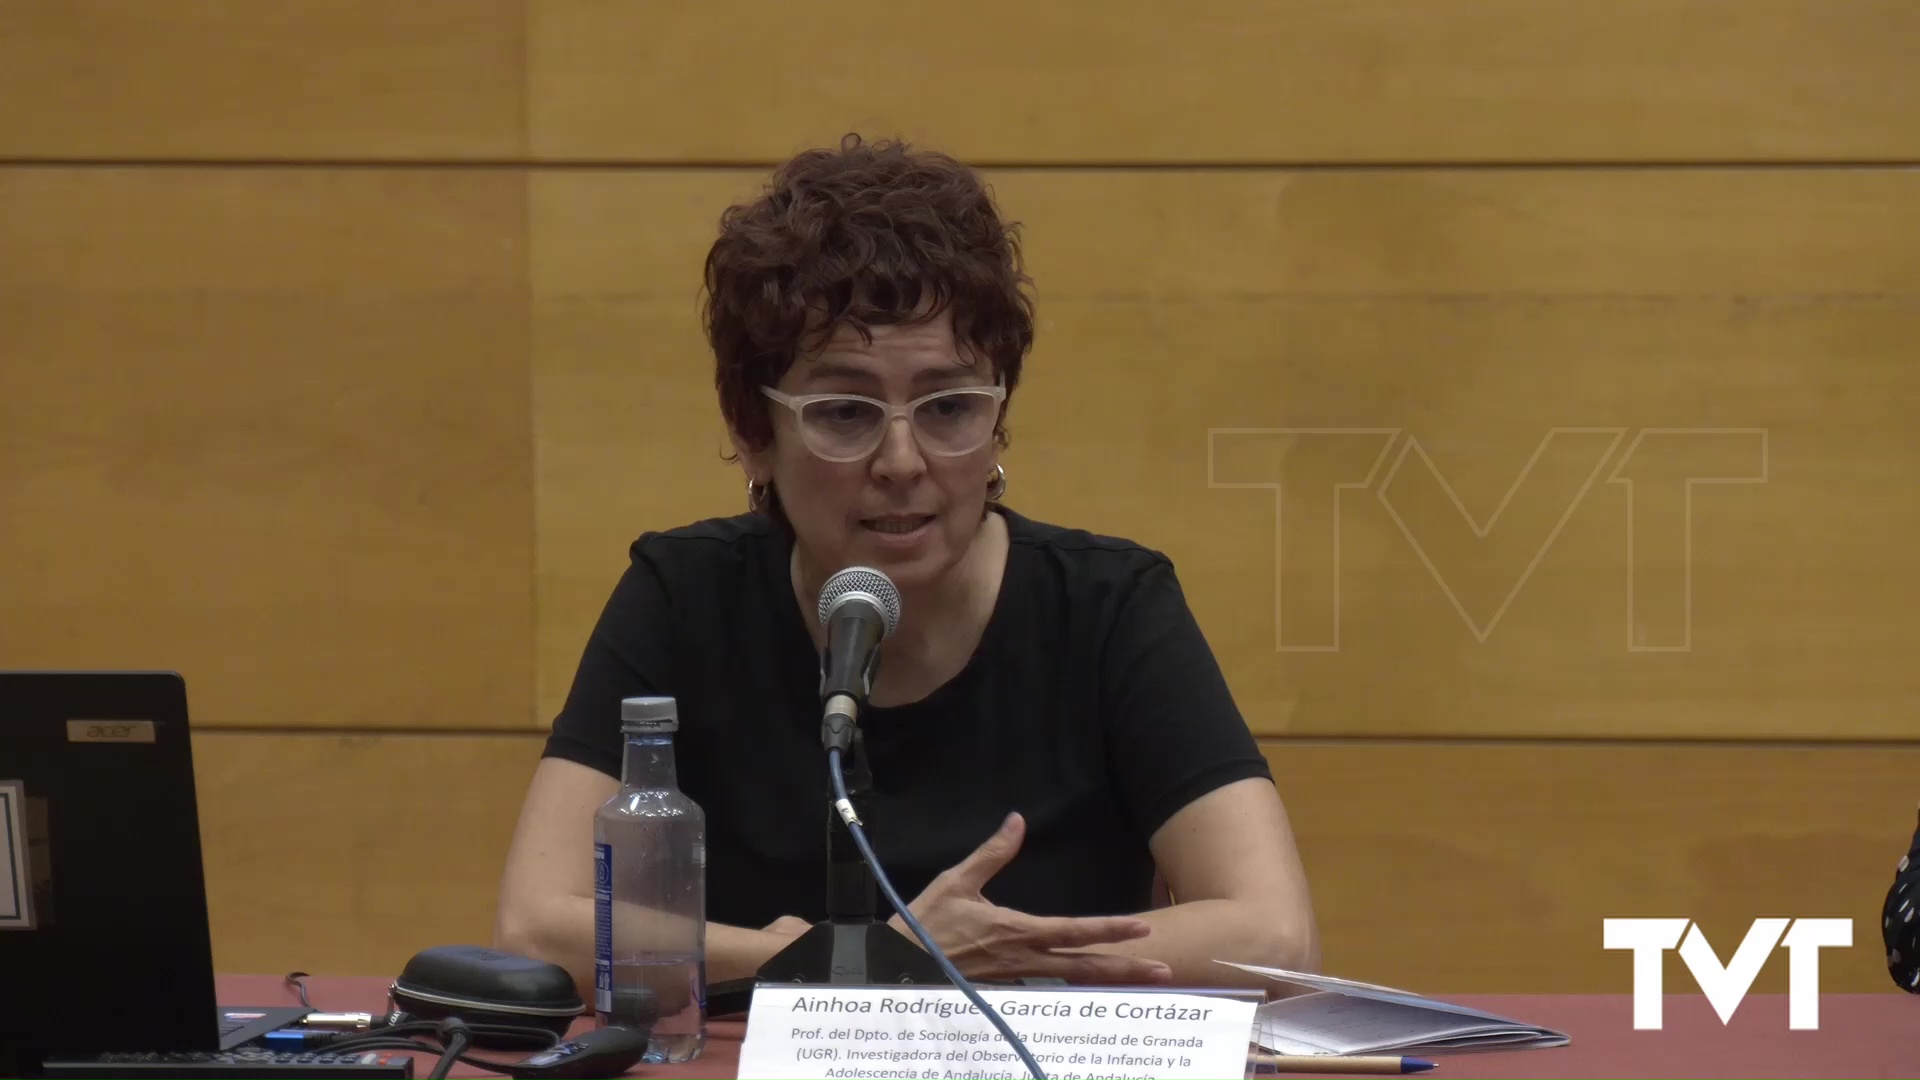 La pobreza infantil en España, a debate - V Jornadas RUIA - Conferencia Ainhoa Rodríguez